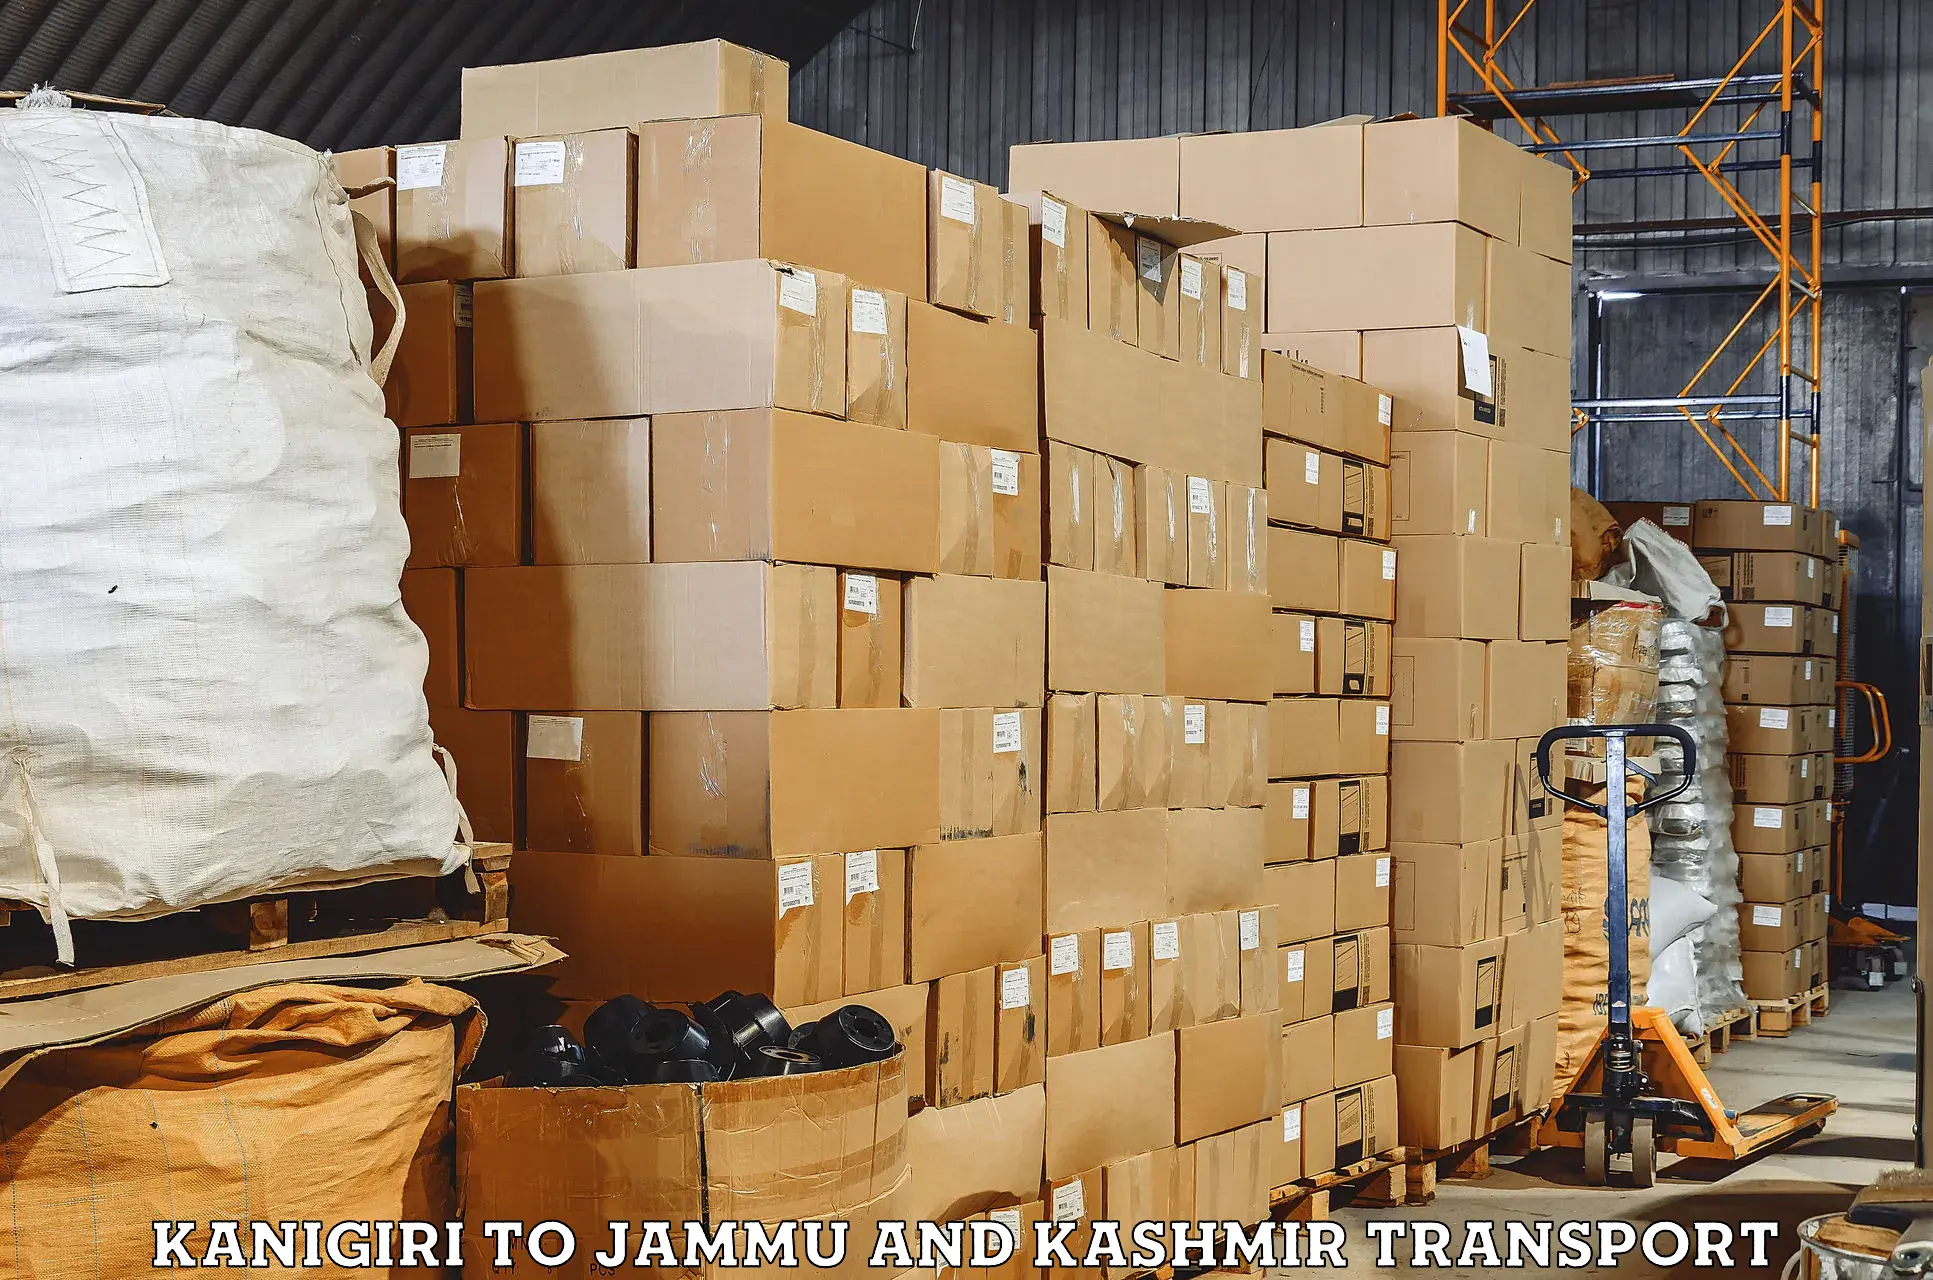 Truck transport companies in India Kanigiri to Leh